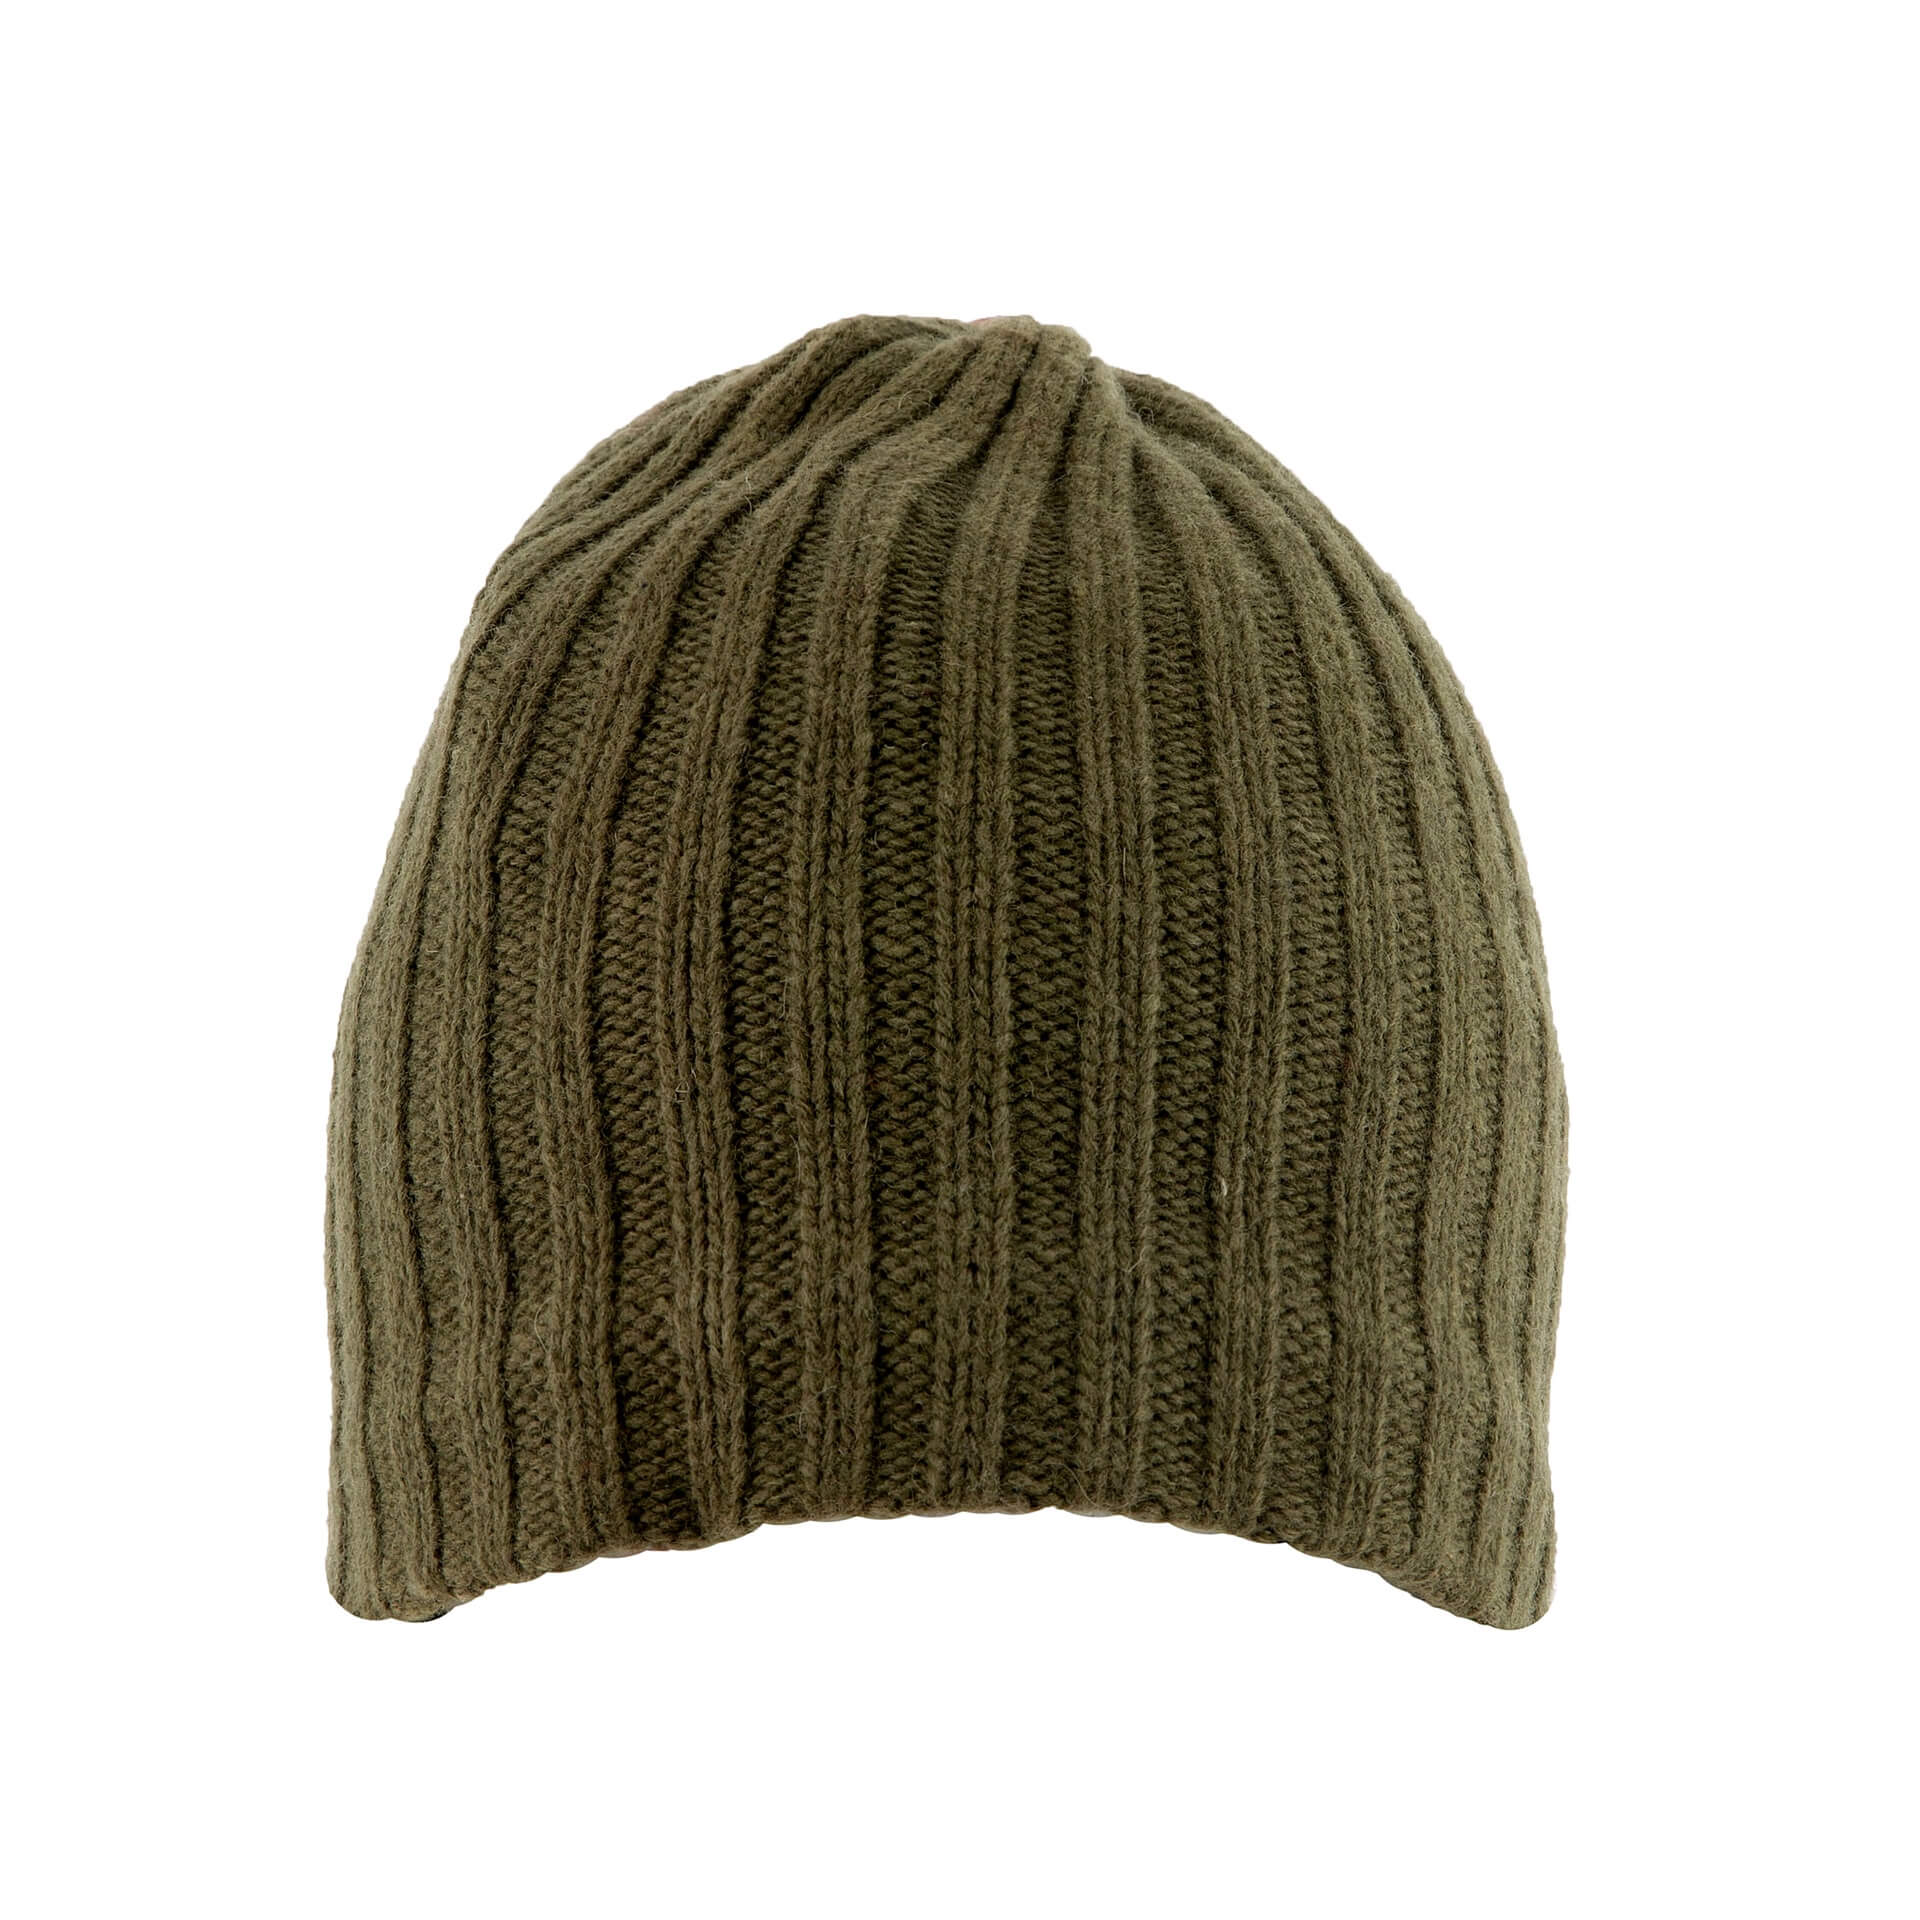 Wool Beanie Hat in Khaki Green